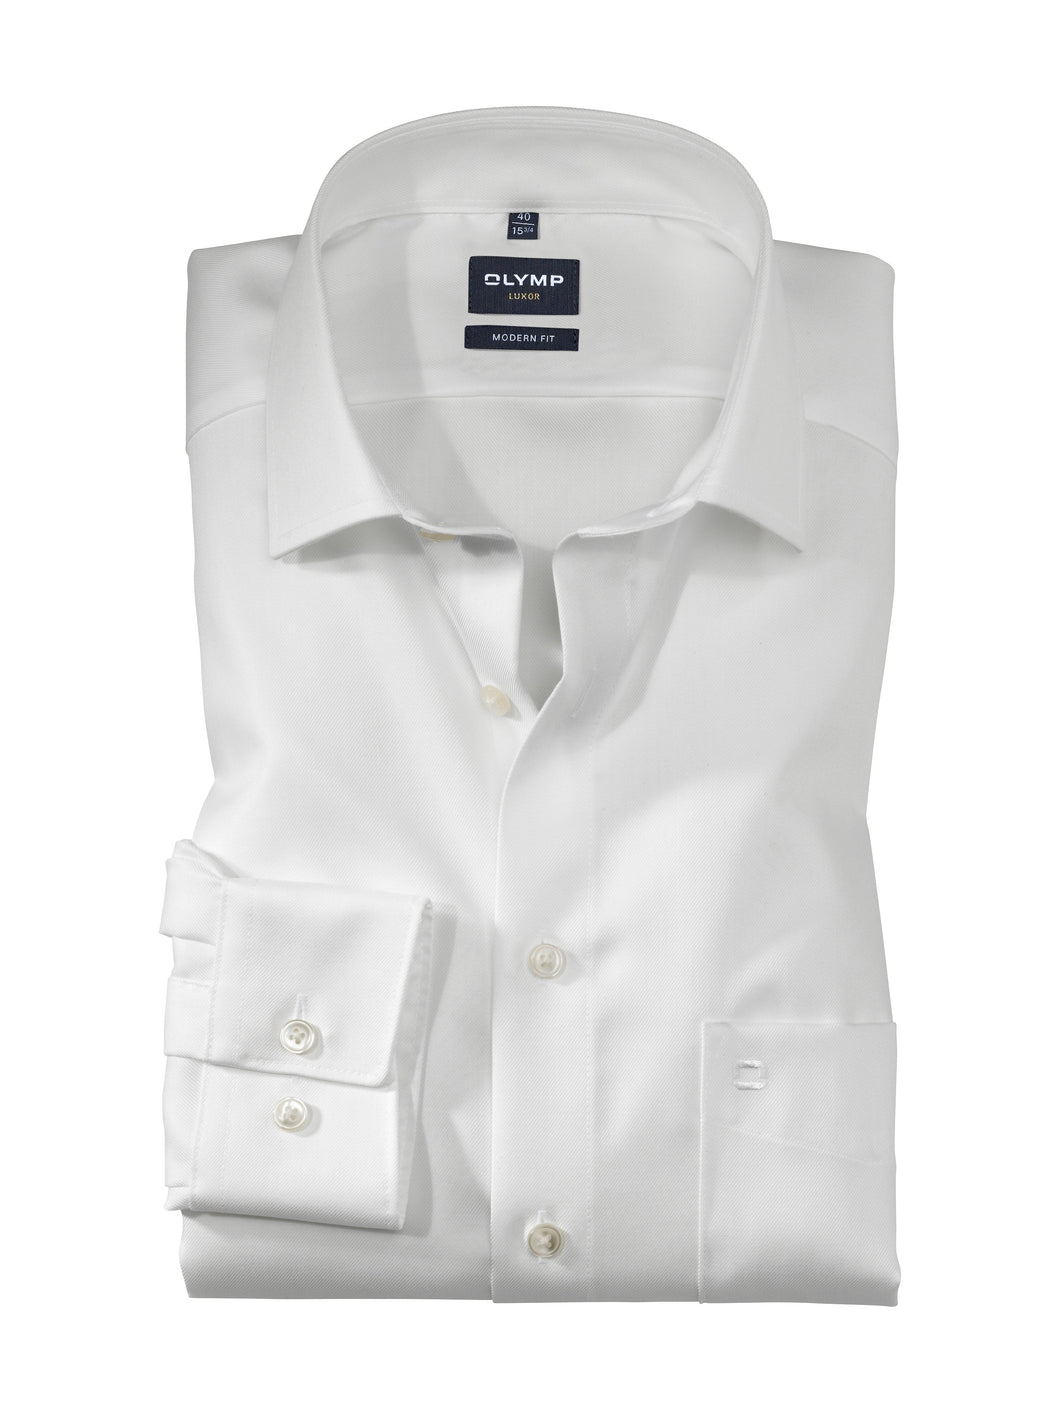 New Olymp long sleeve regular fit white dress shirt